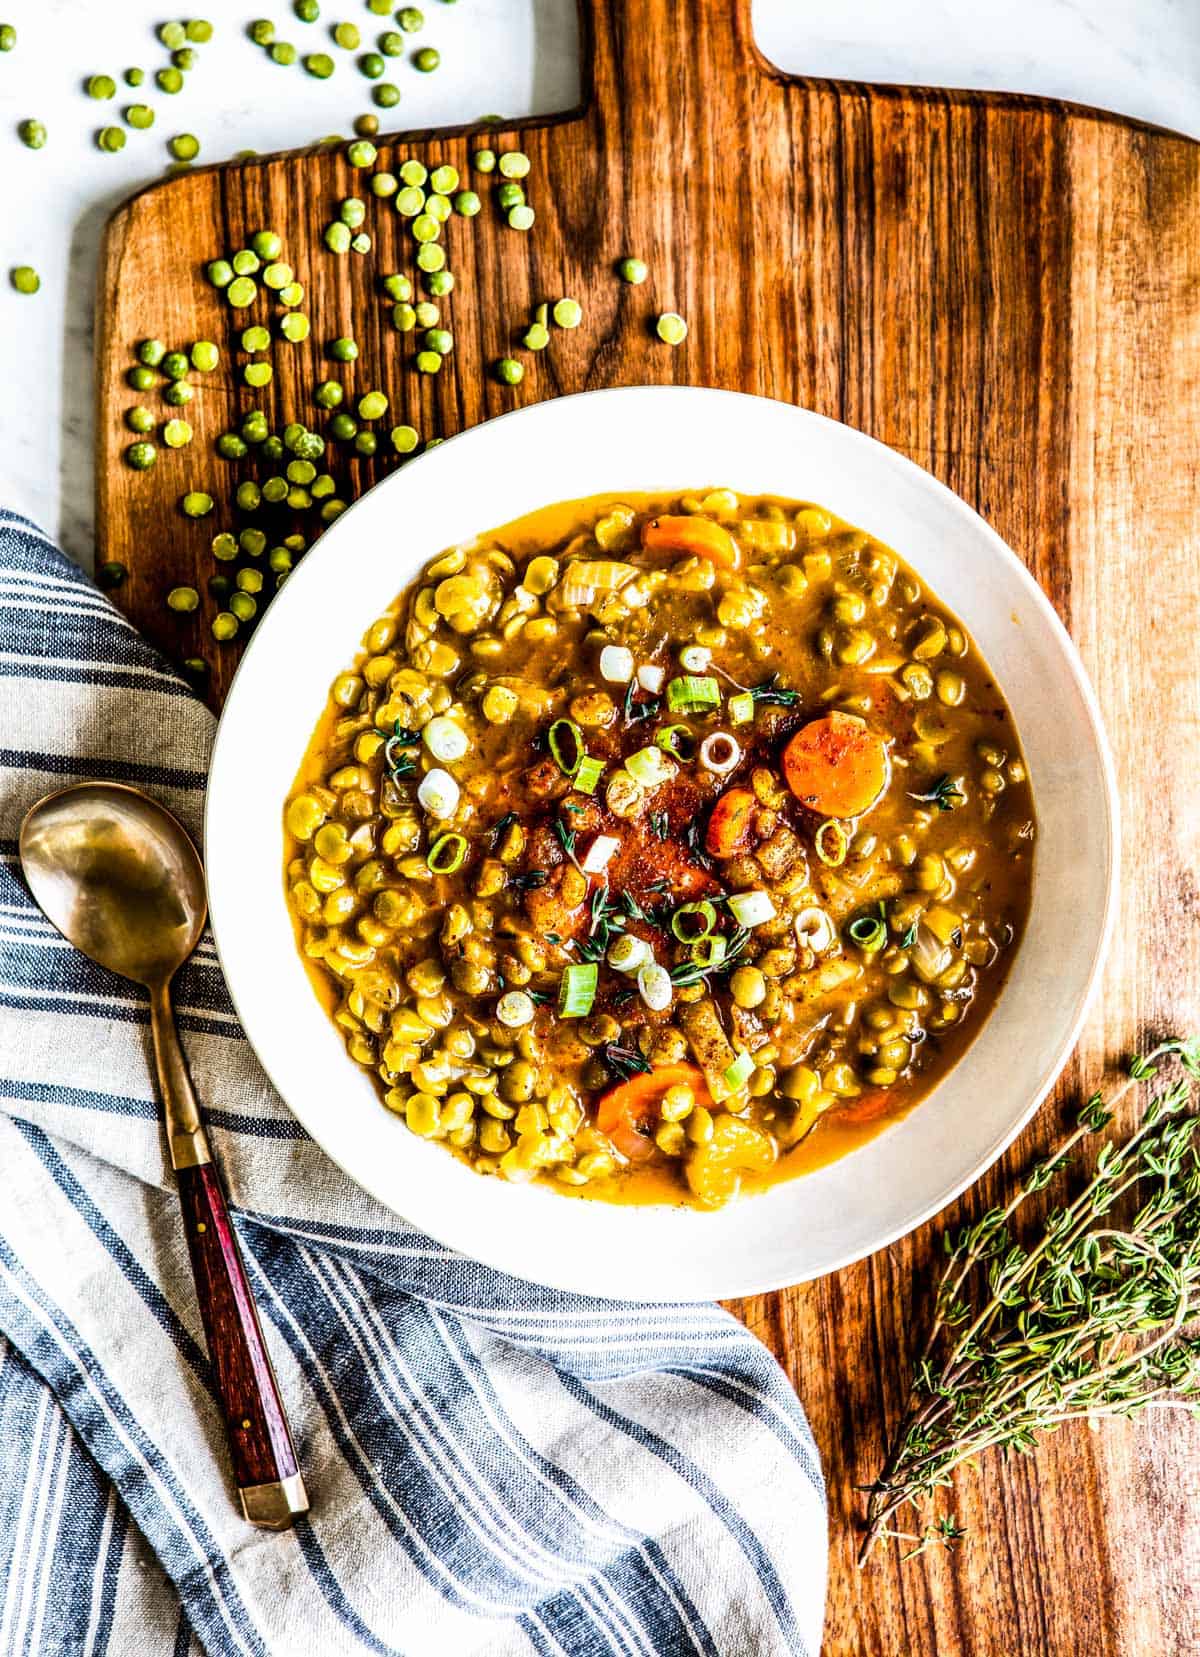 Vegetarian split pea soup recipe